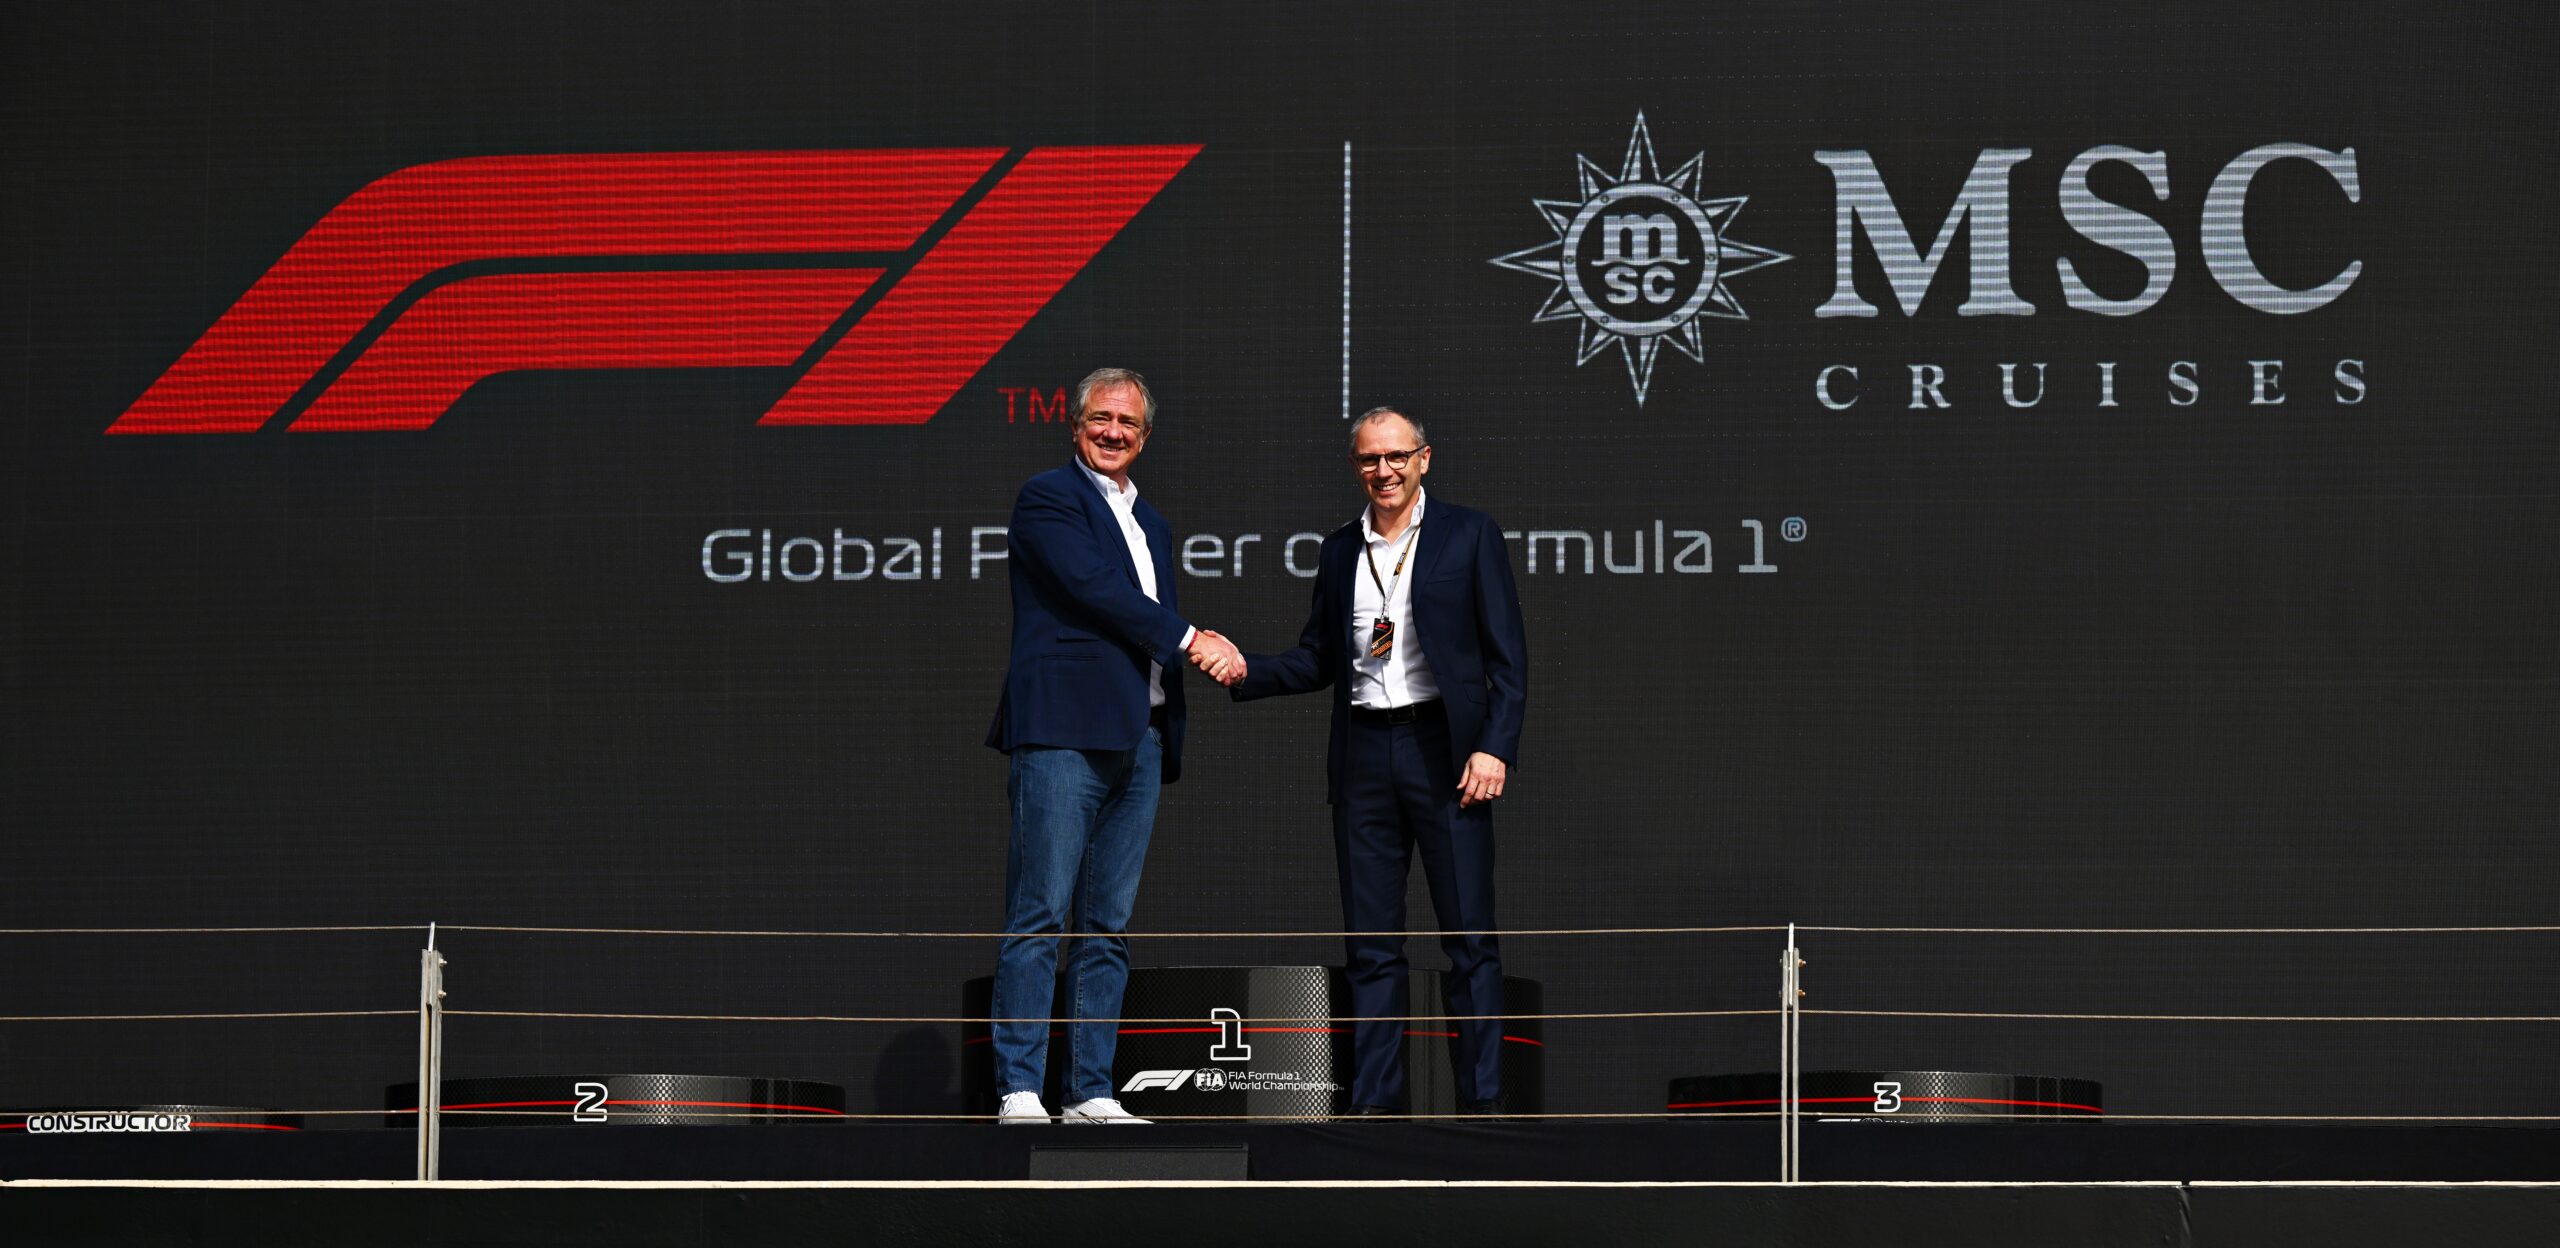 La Fórmula 1 anuncia a MSC Cruceros como socio global de cara a la temporada 2022